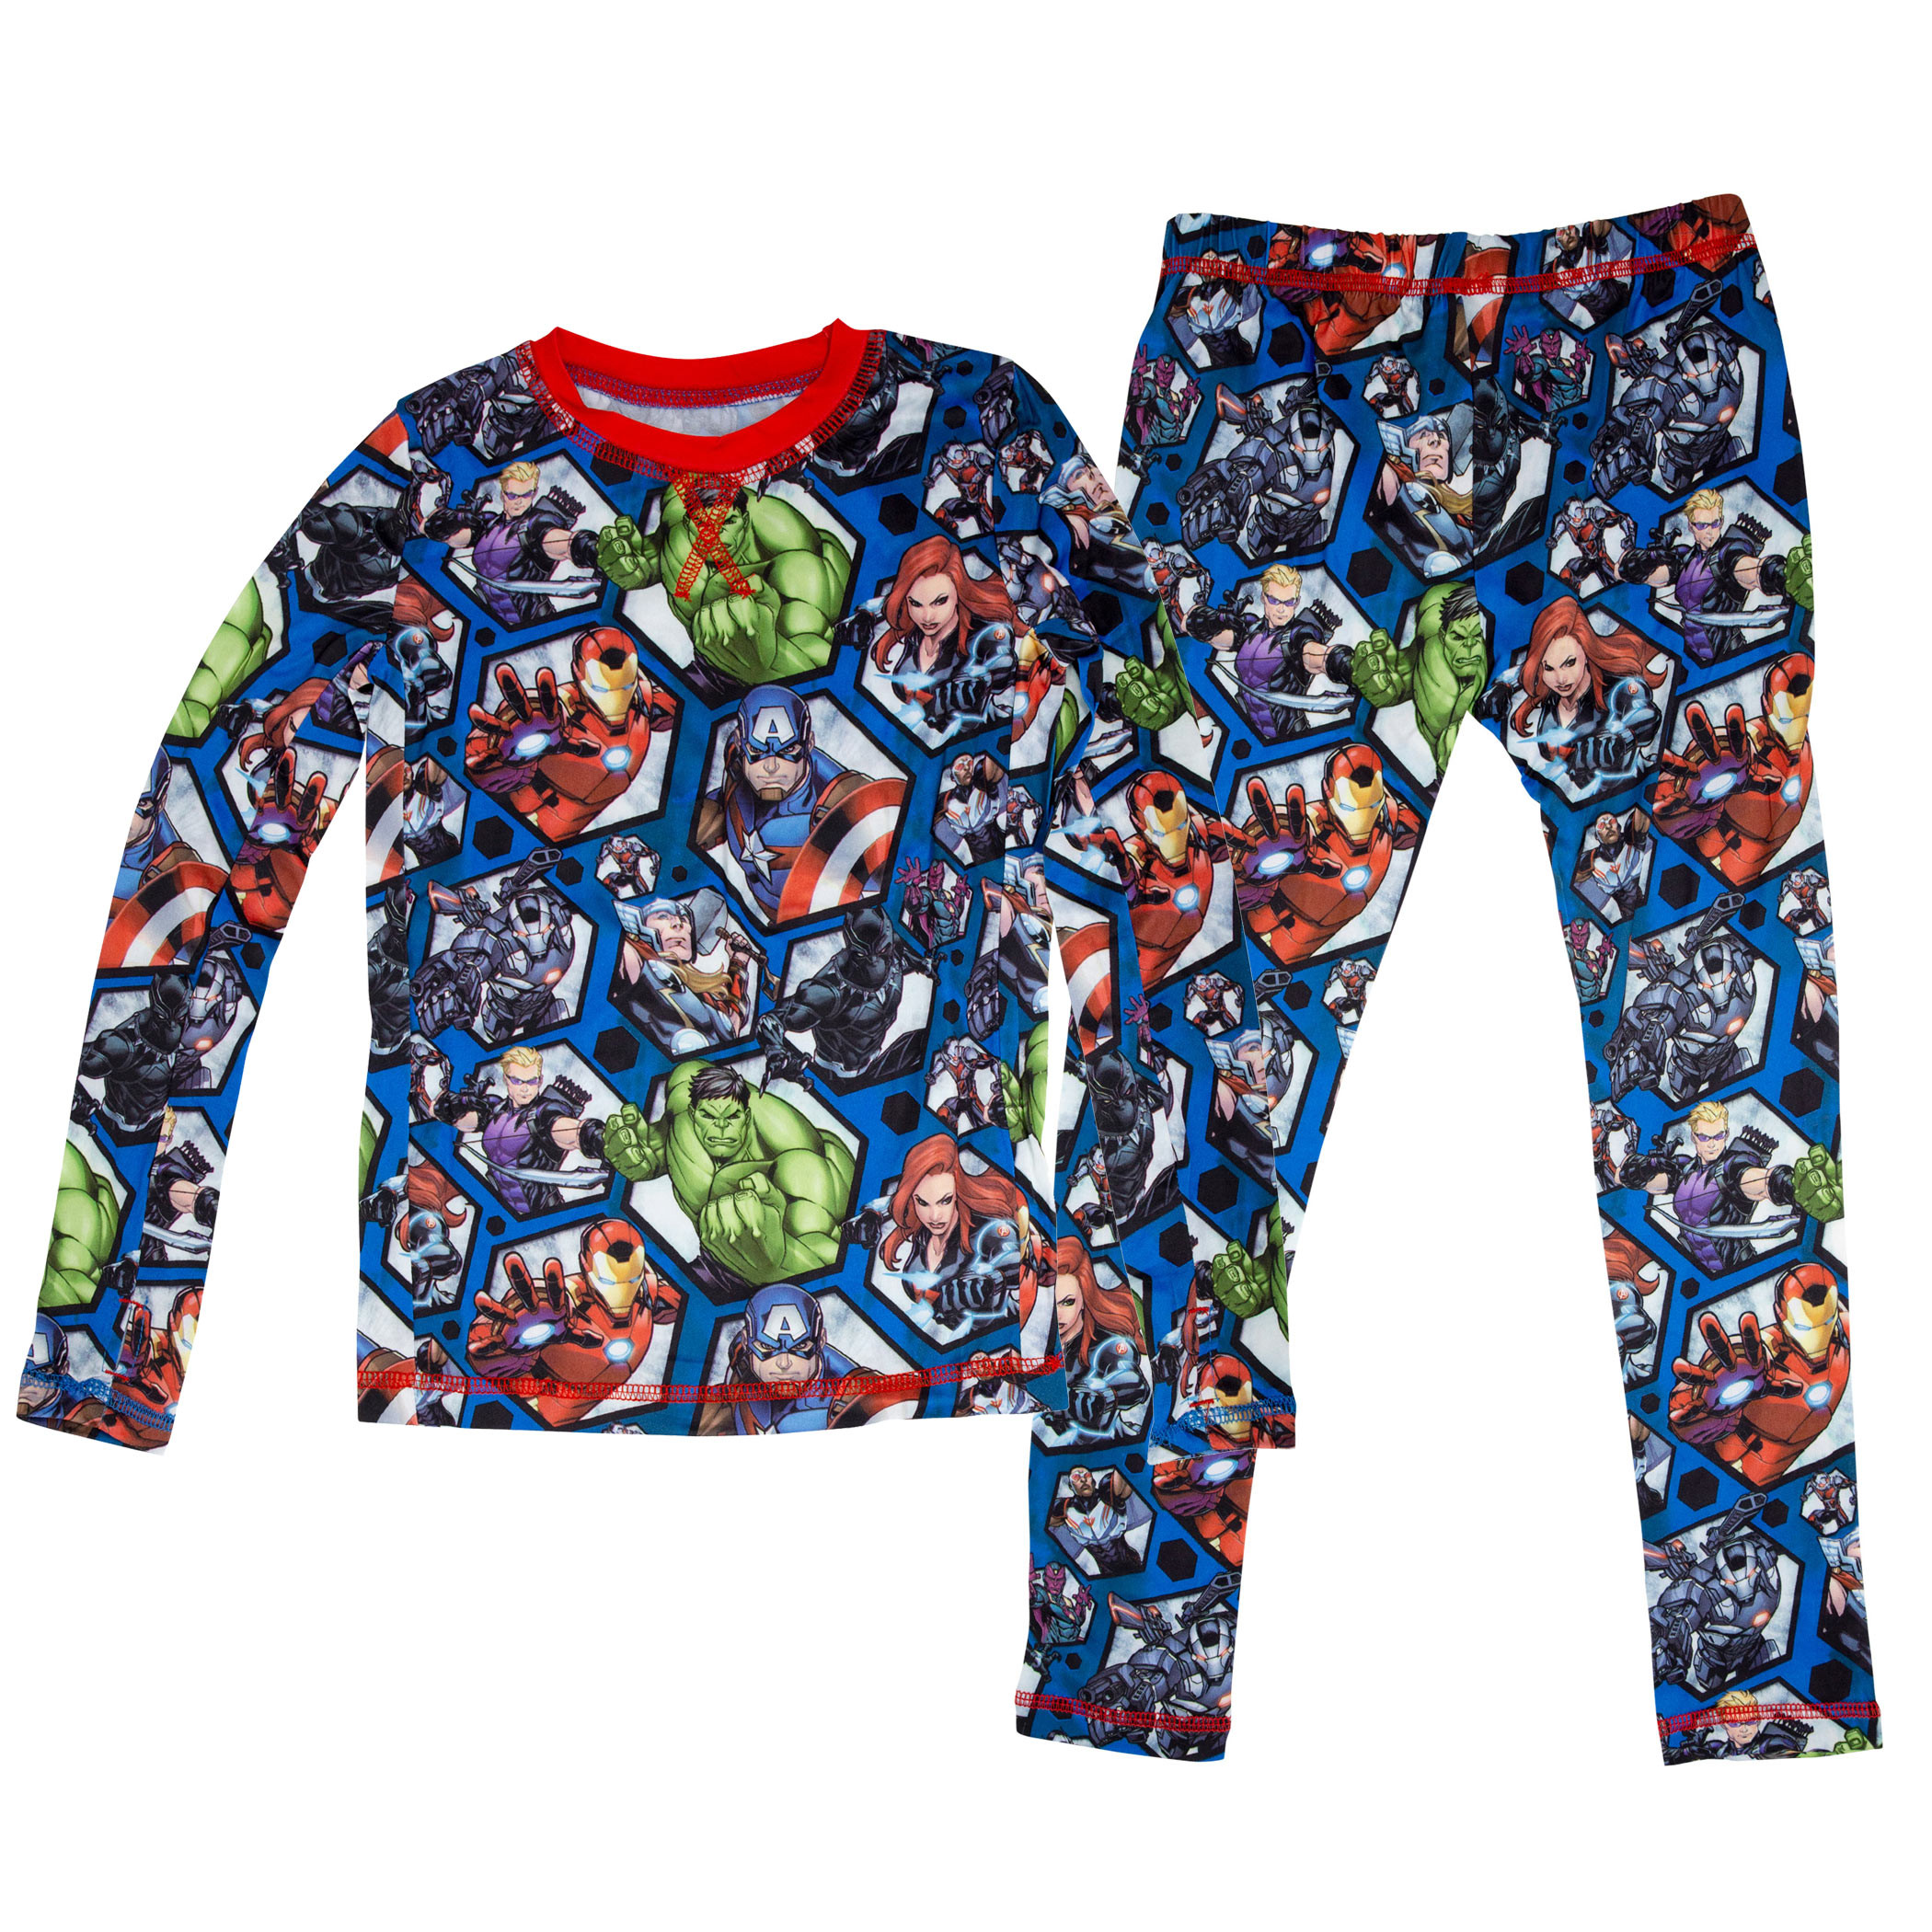 NWT Disney Store Marvel Avengers Age of Ultron Sleep Set Pajamas Boys 7 8 10 12 